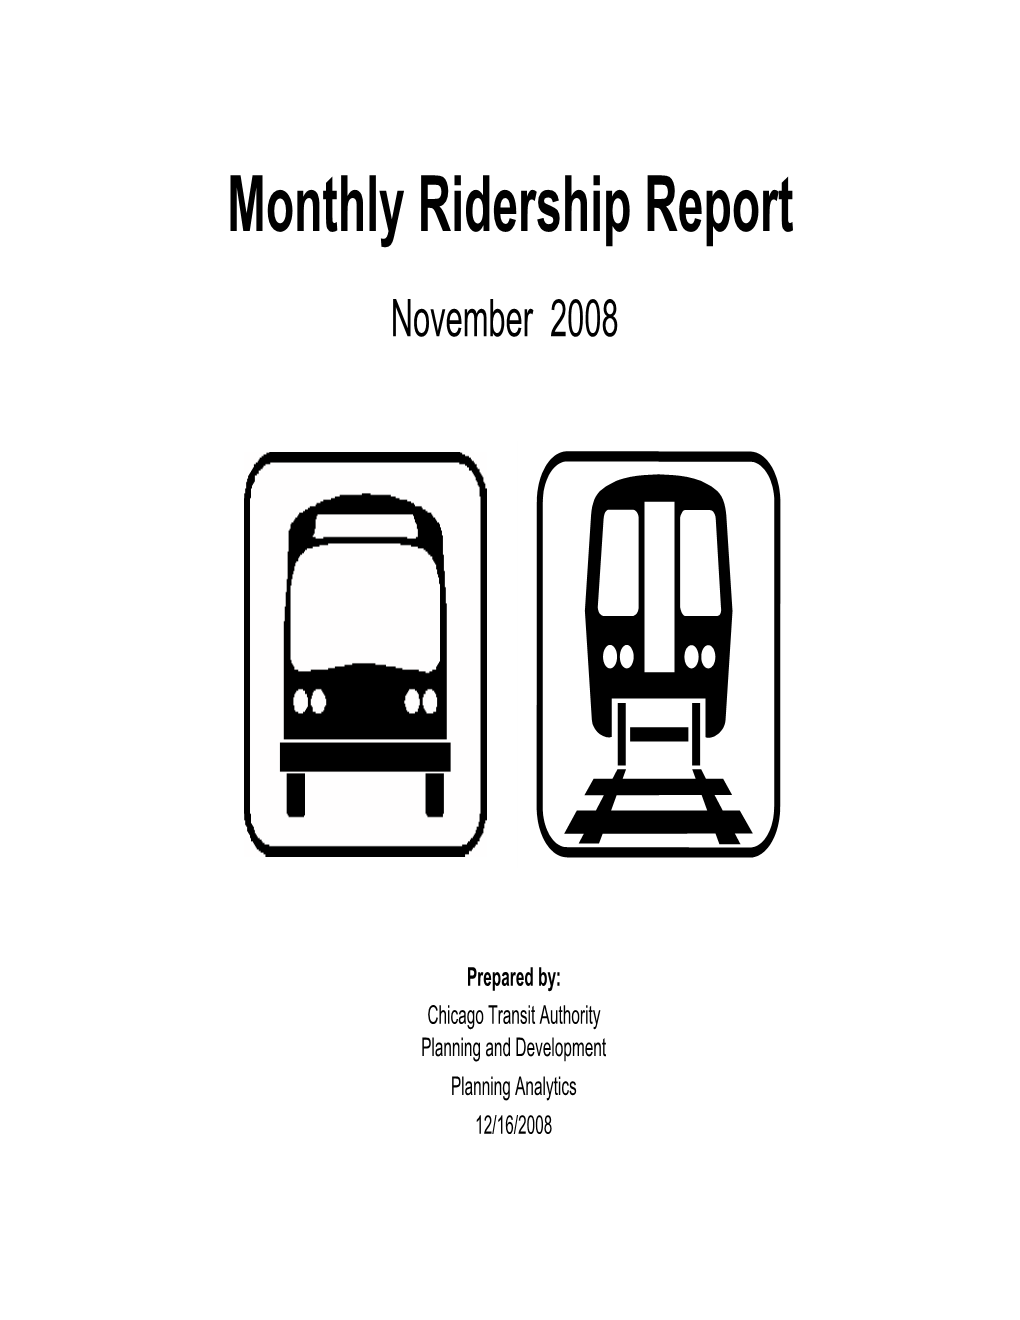 Monthly Ridership Report November 2008